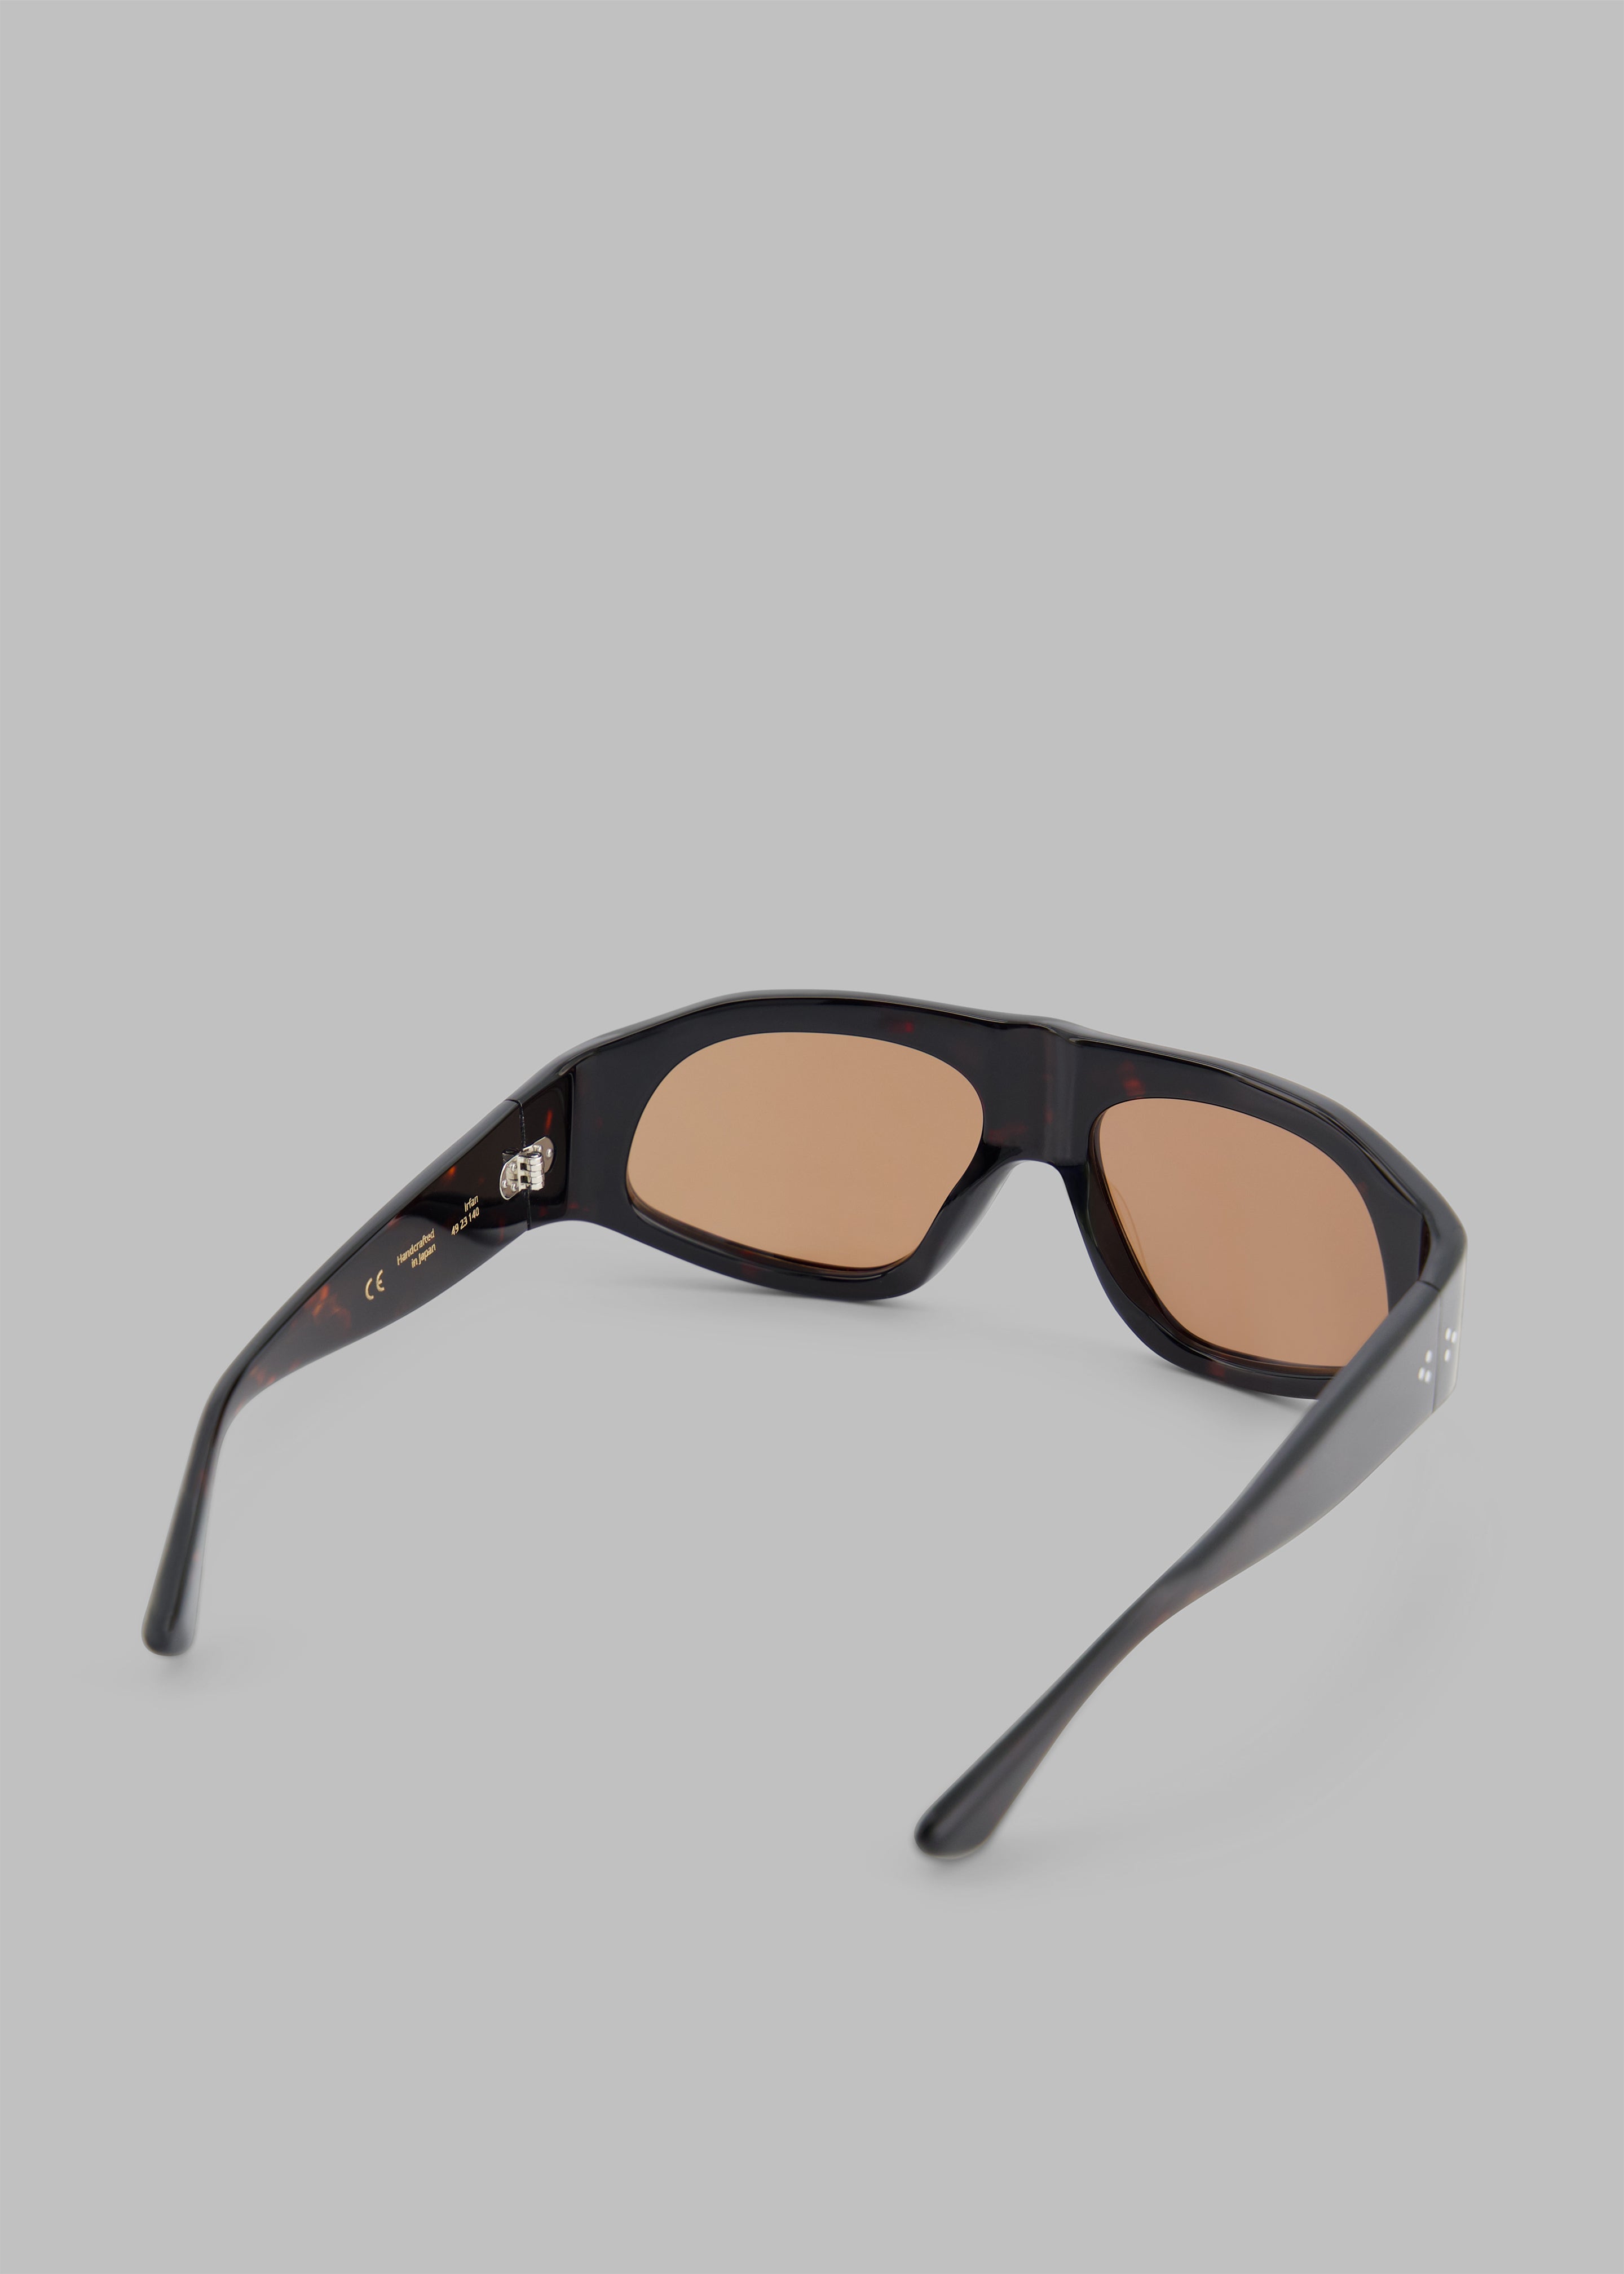 Port Tanger Irfan Sunglasses - Myrrh Acetate/Tobacco Lens - 10